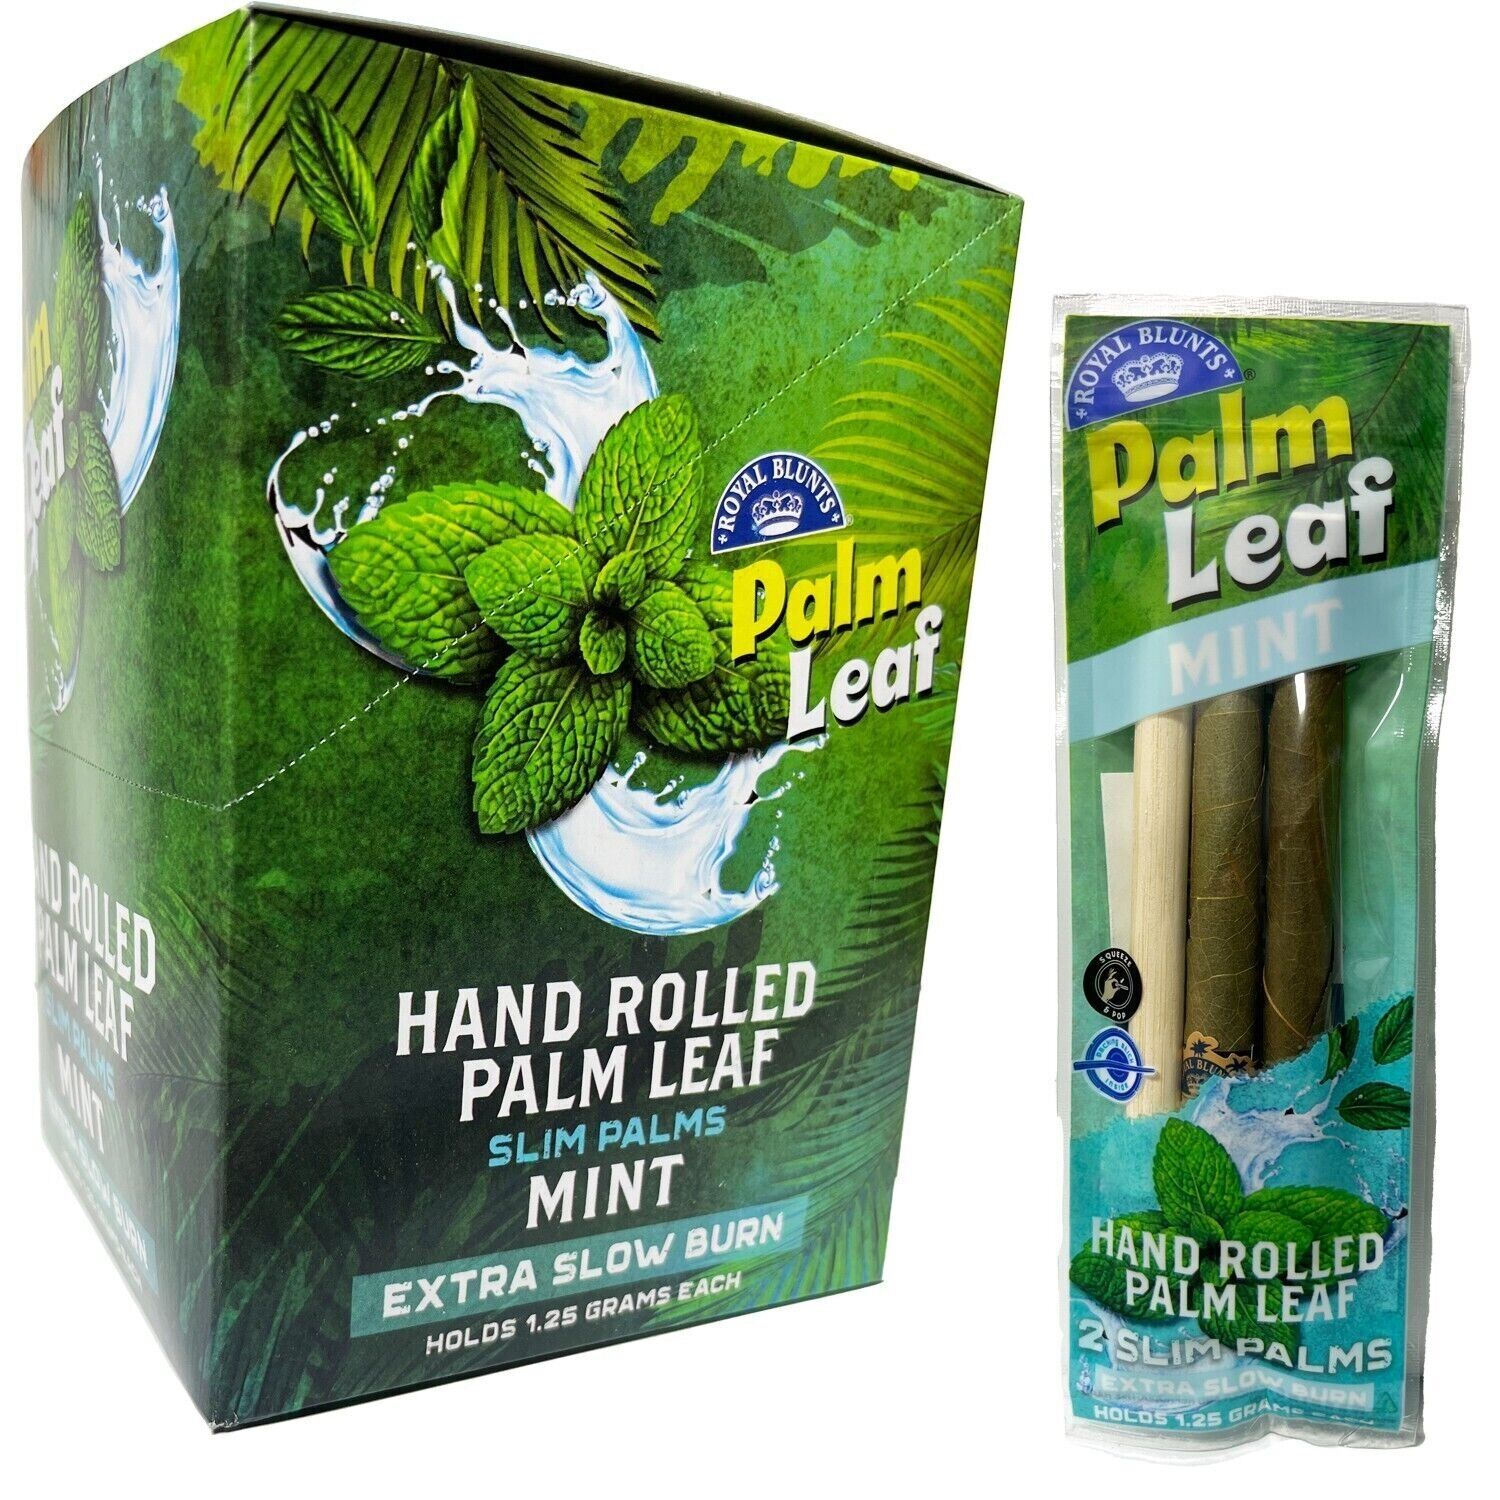 Royal B - Slim Palms -  Hand Rolled Palm Leafs - Mint (Box of 24)